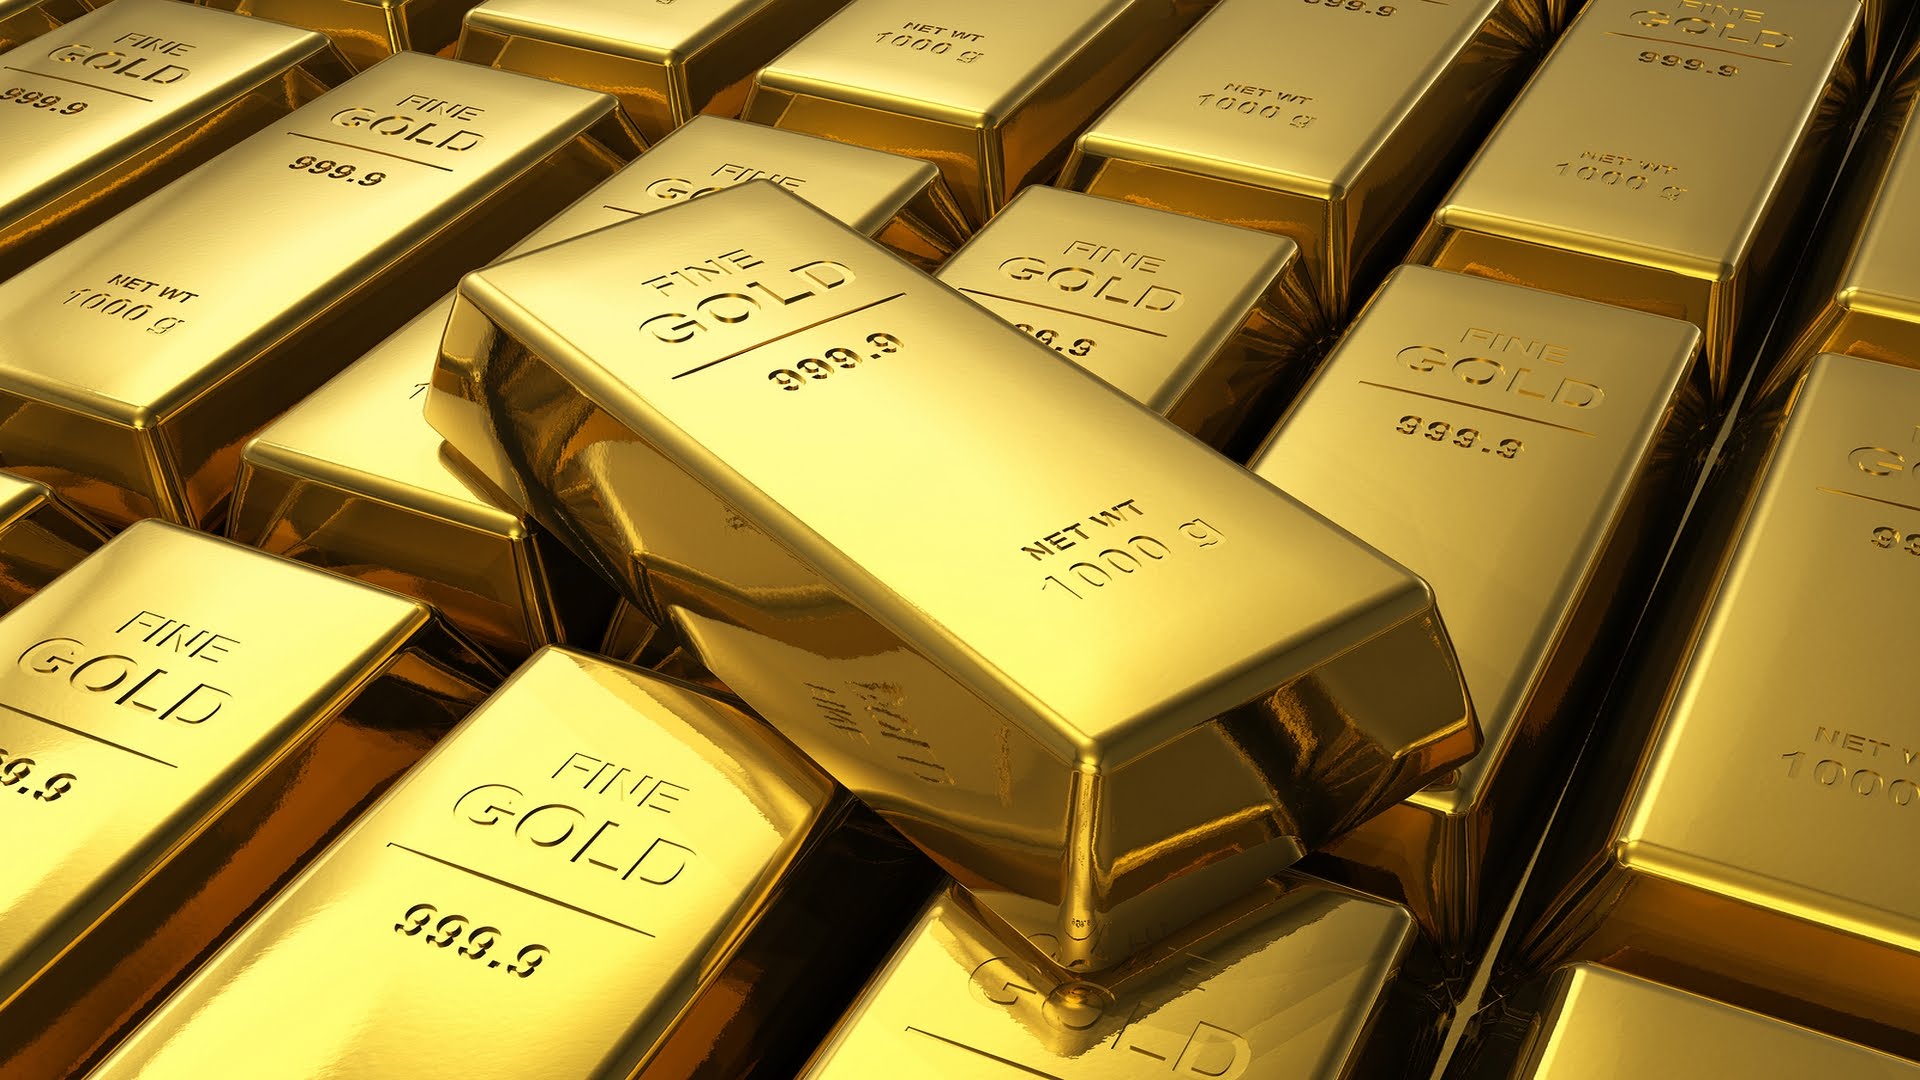 gold price hike